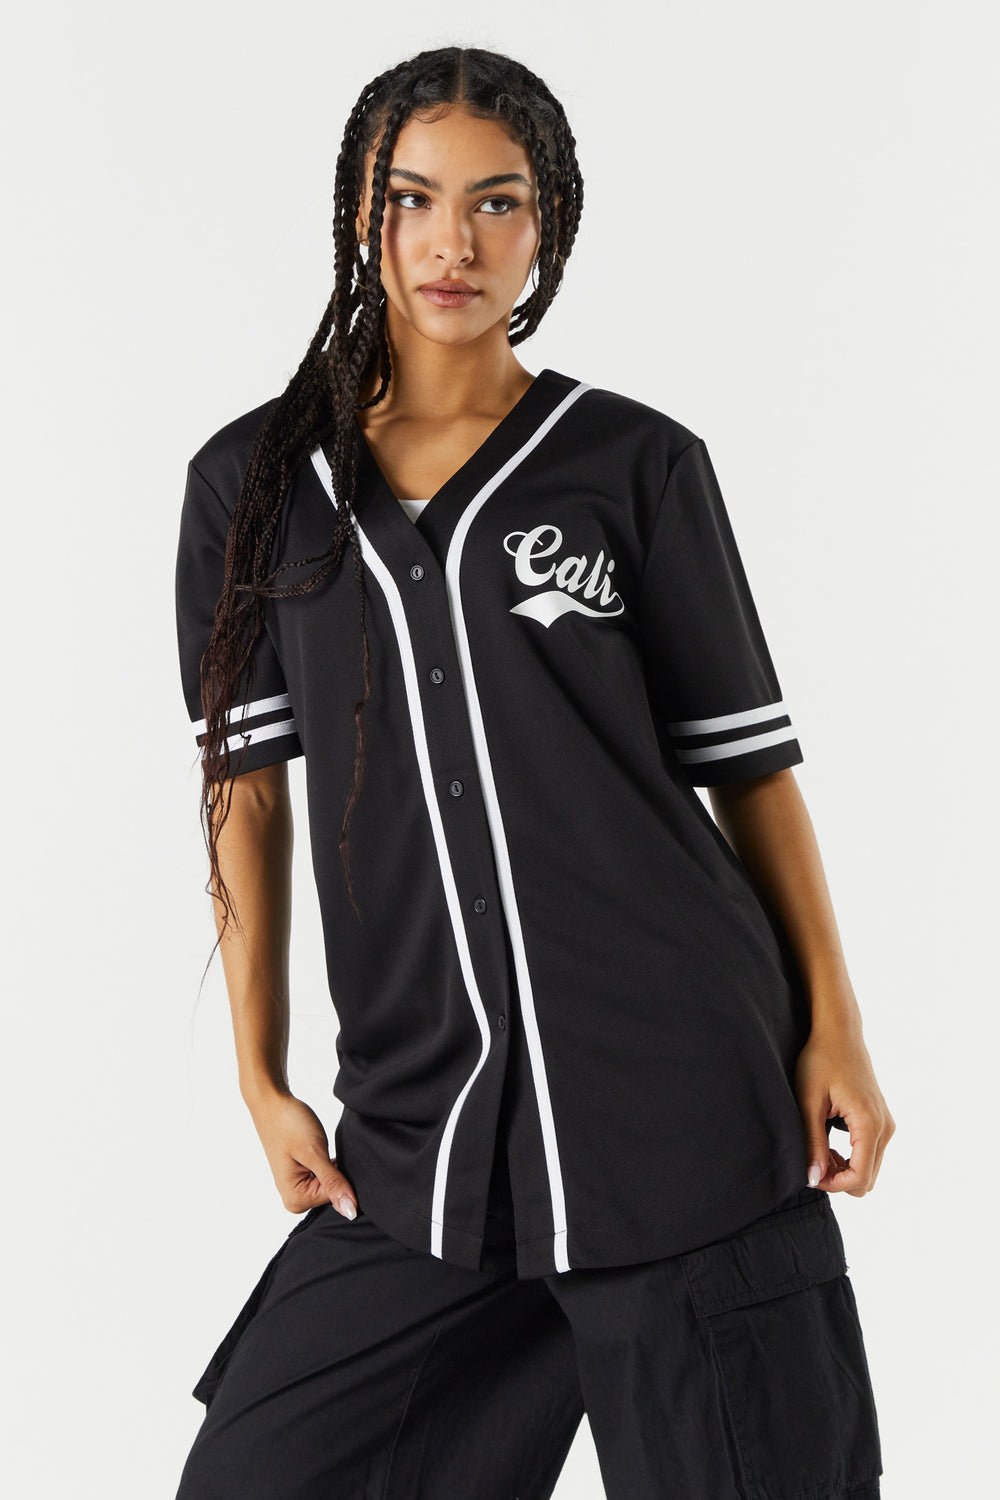 Girl Baseball Jersey 